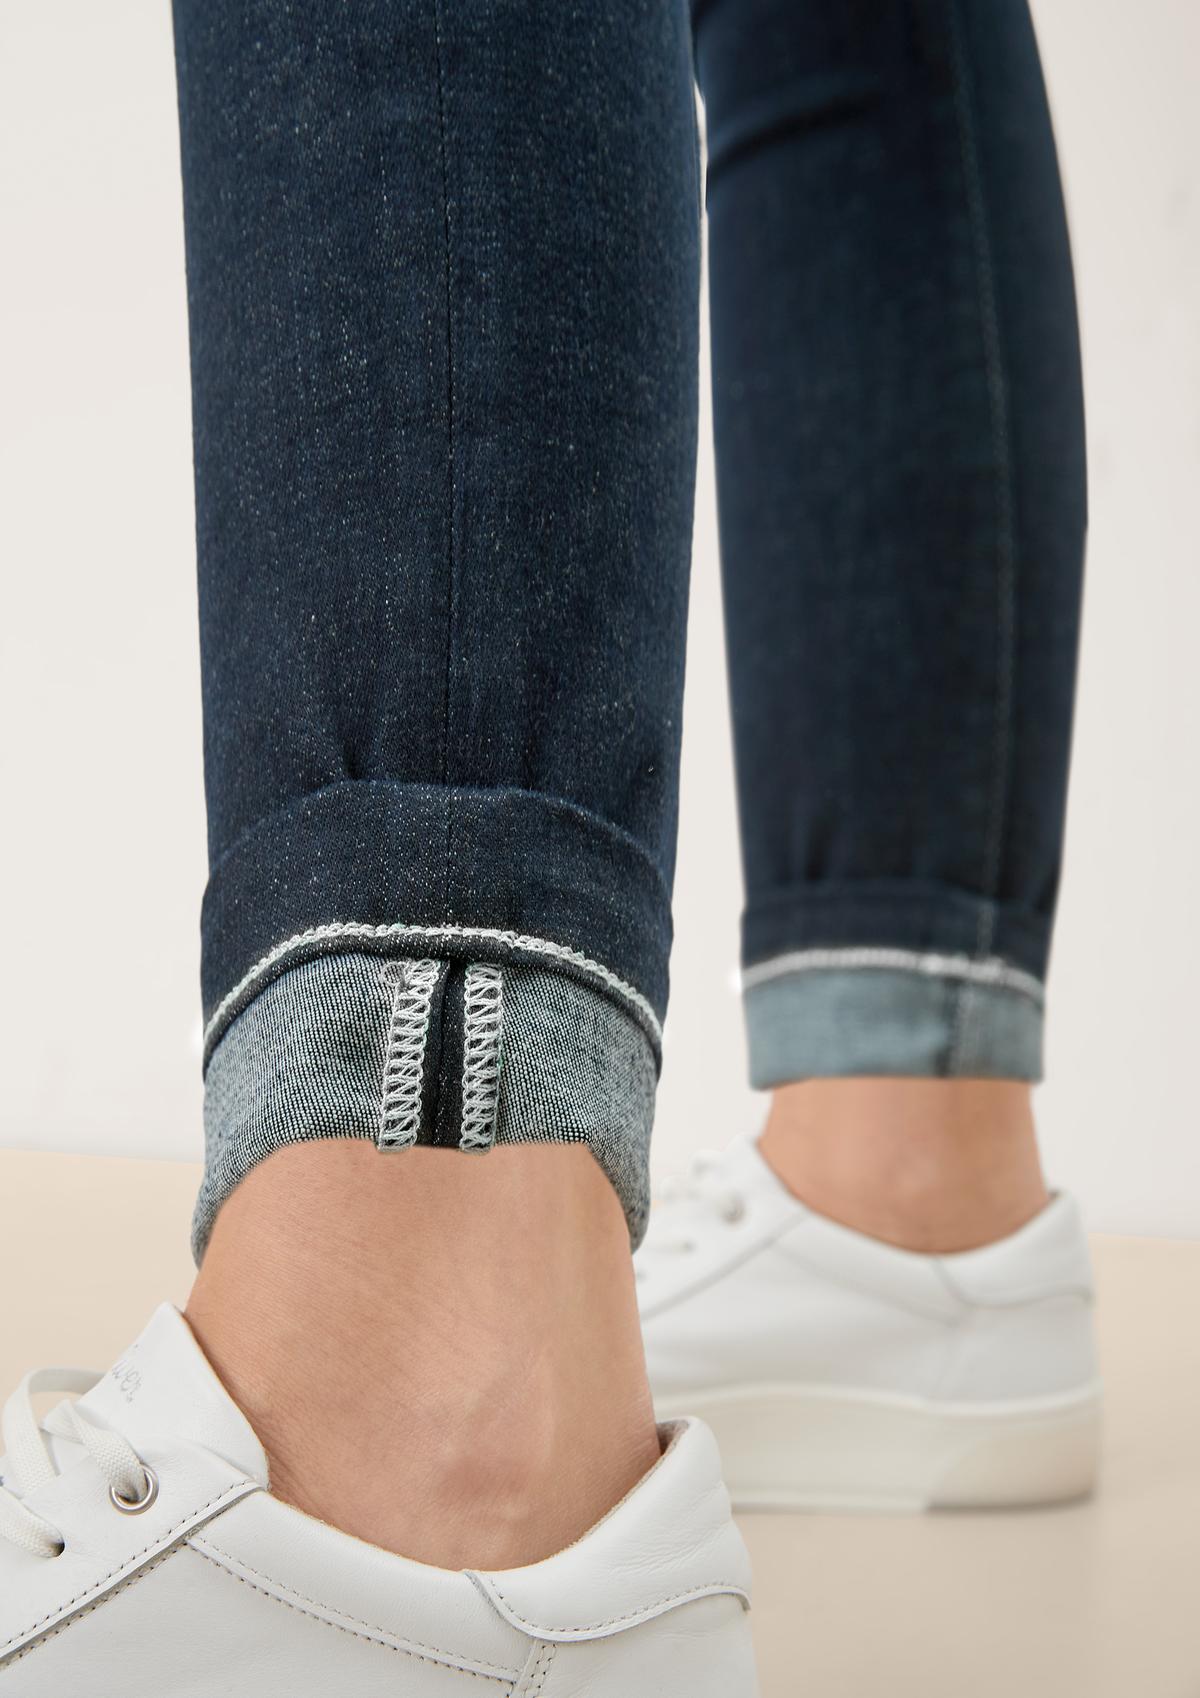 s.Oliver Skinny: Jeans mit Sattelbund